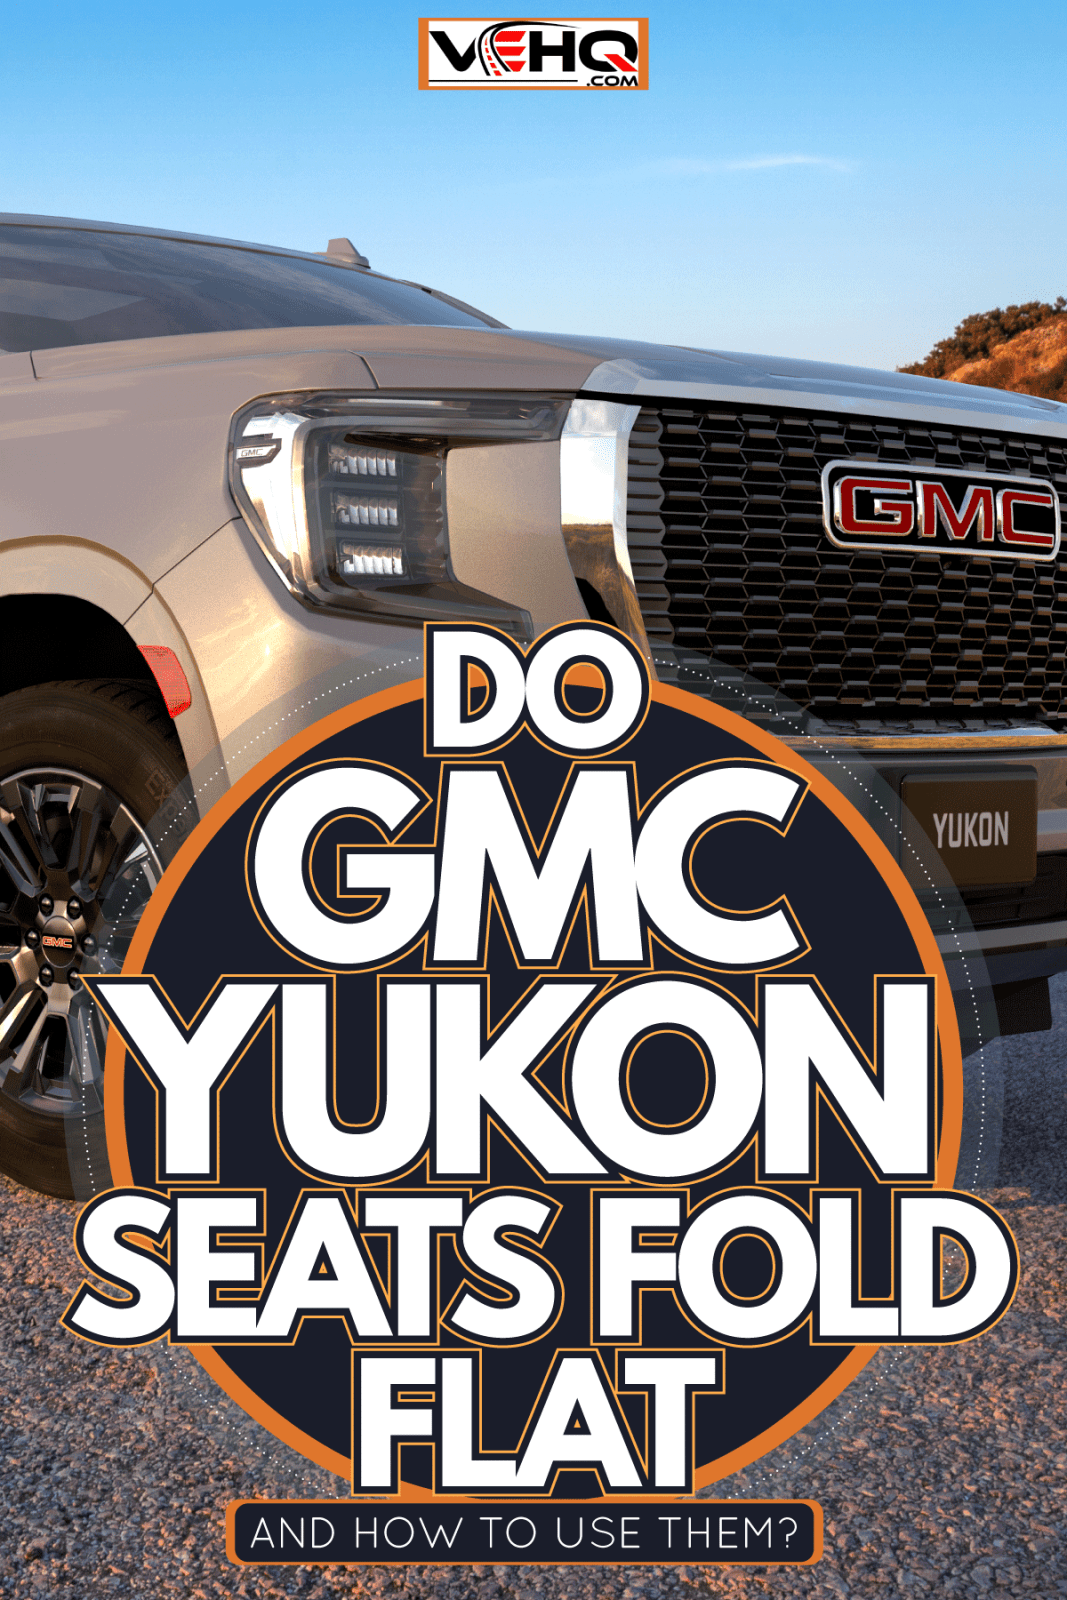 GMC Yukon Denali, American Full-Size SUV, Large SUV, Do GMC Yukon Seats Fold Flat [And How To Use Them]?